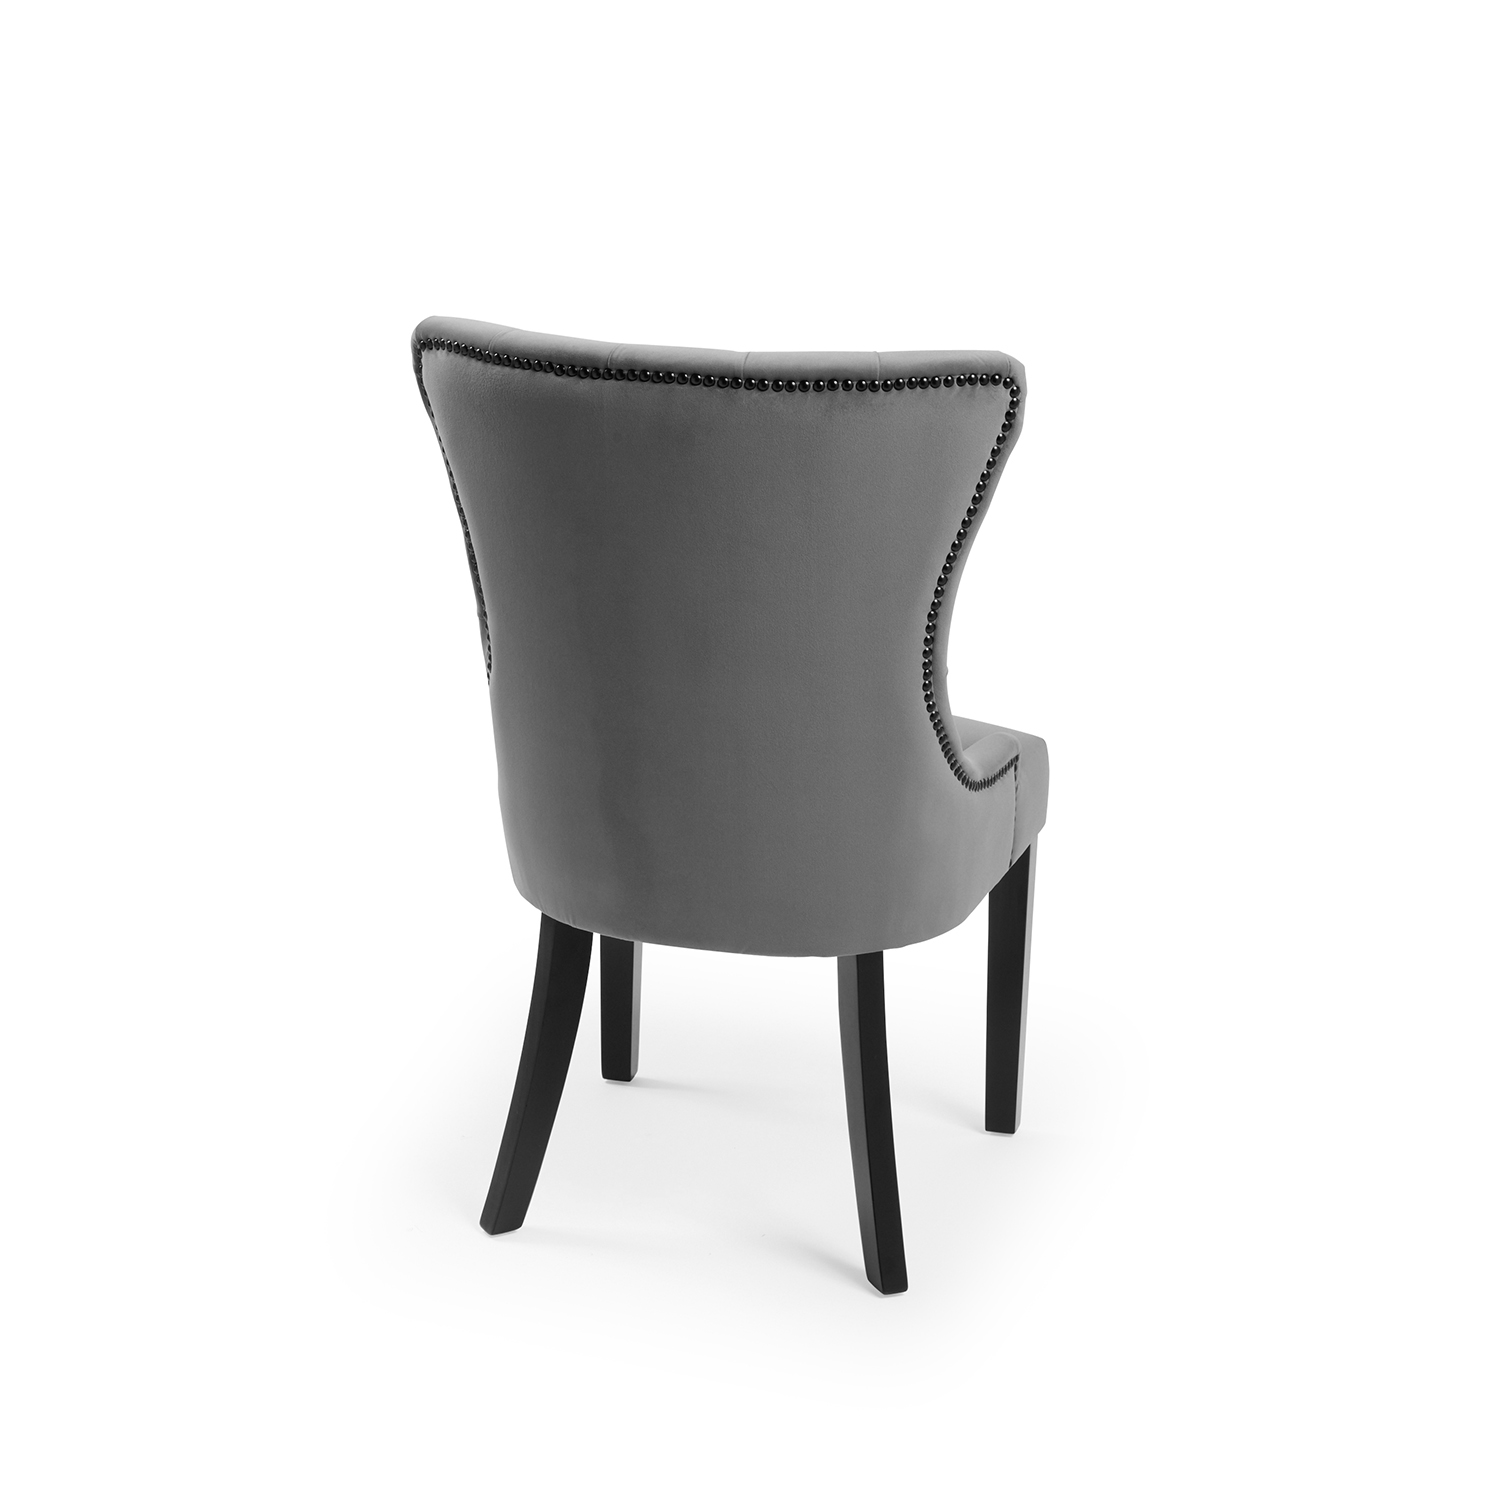 New Knightsbridge Grey Brushed Velvet Dining Chair – Black Studs